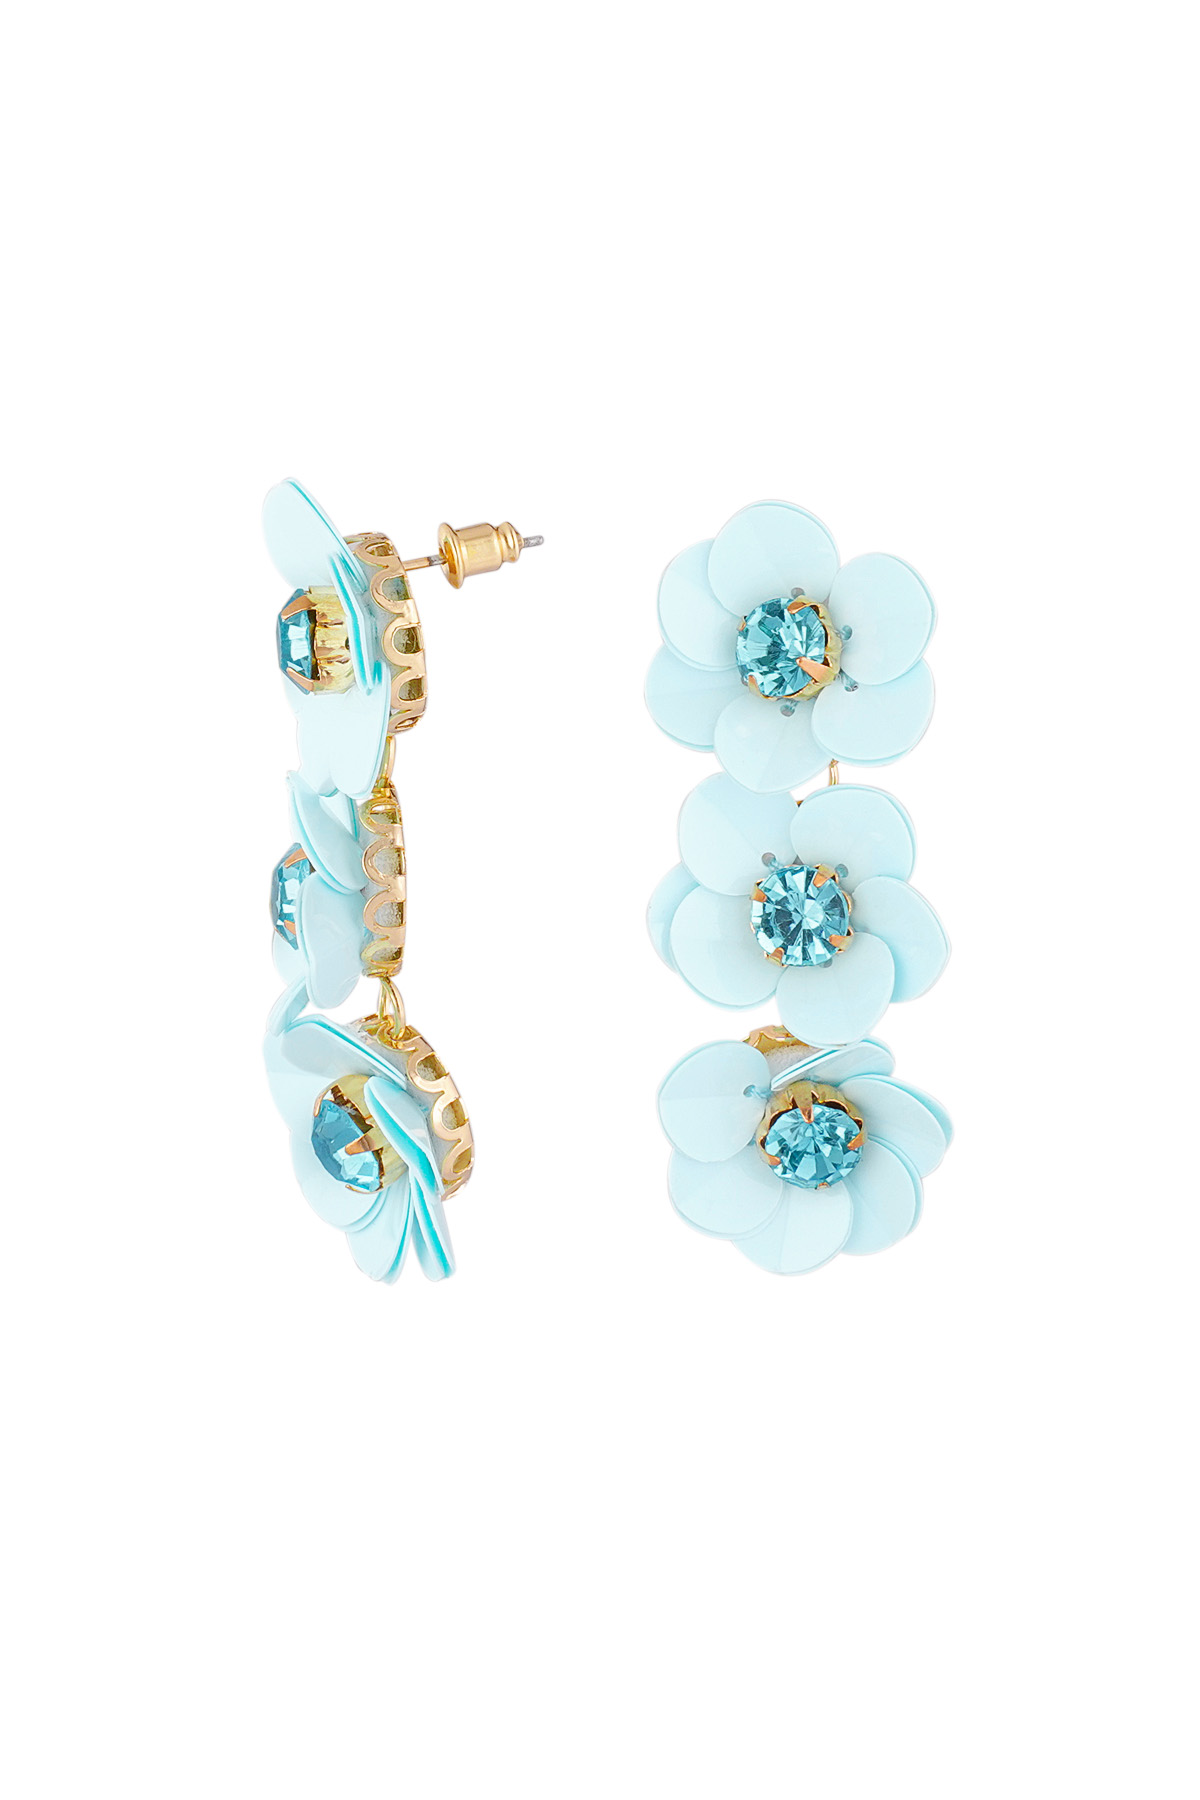 Summery floral trio earrings - light blue